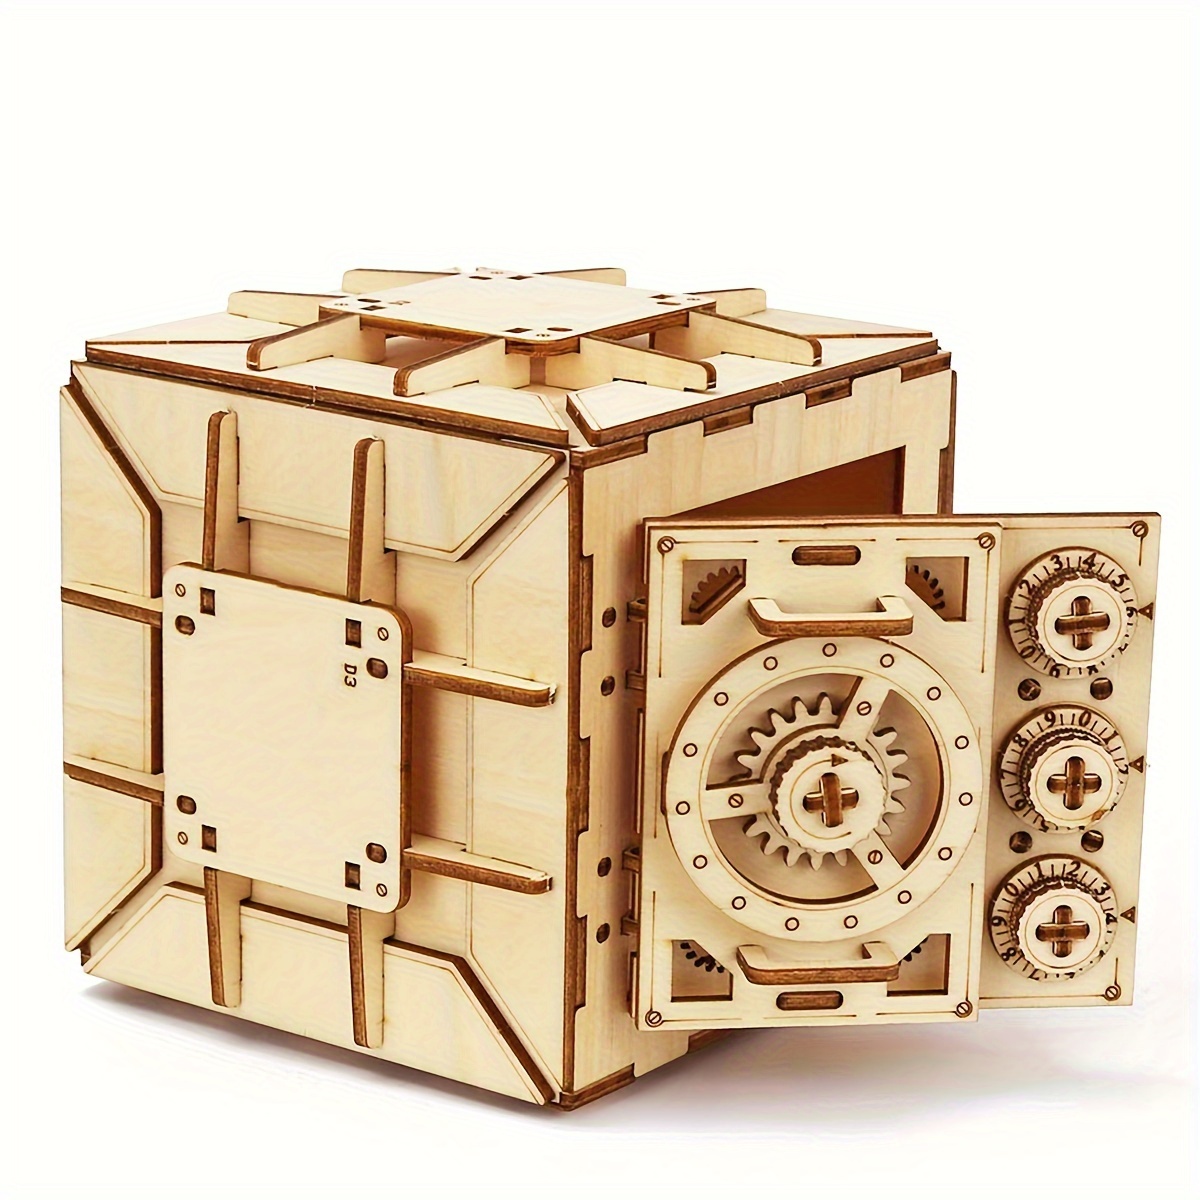 

3d Wooden Puzzle, Password Box Safe Box, Model Toy, Handmade Diy Password